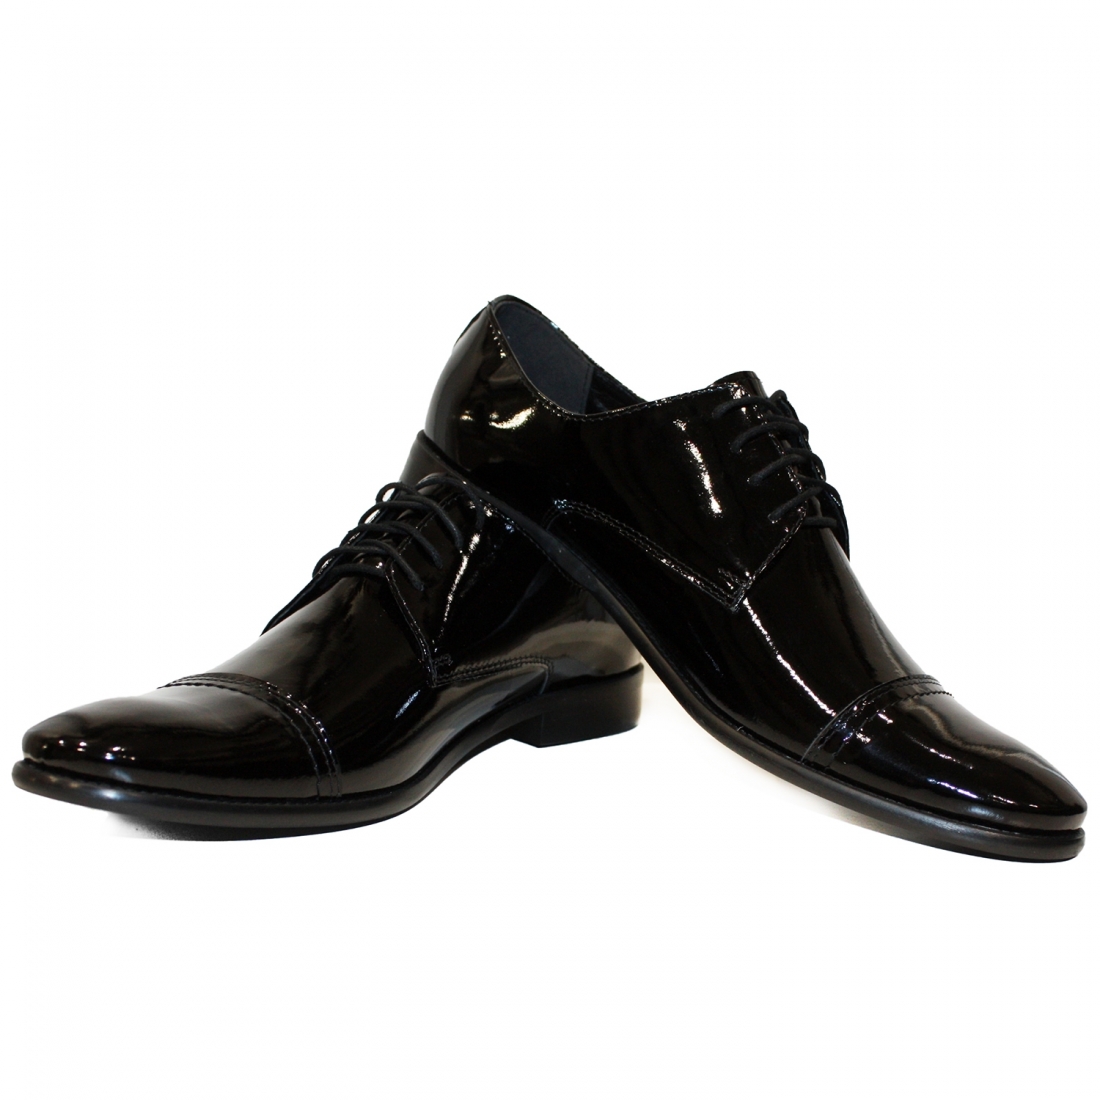 Modello Gurerro - Classic Shoes - Handmade Colorful Italian Leather Shoes